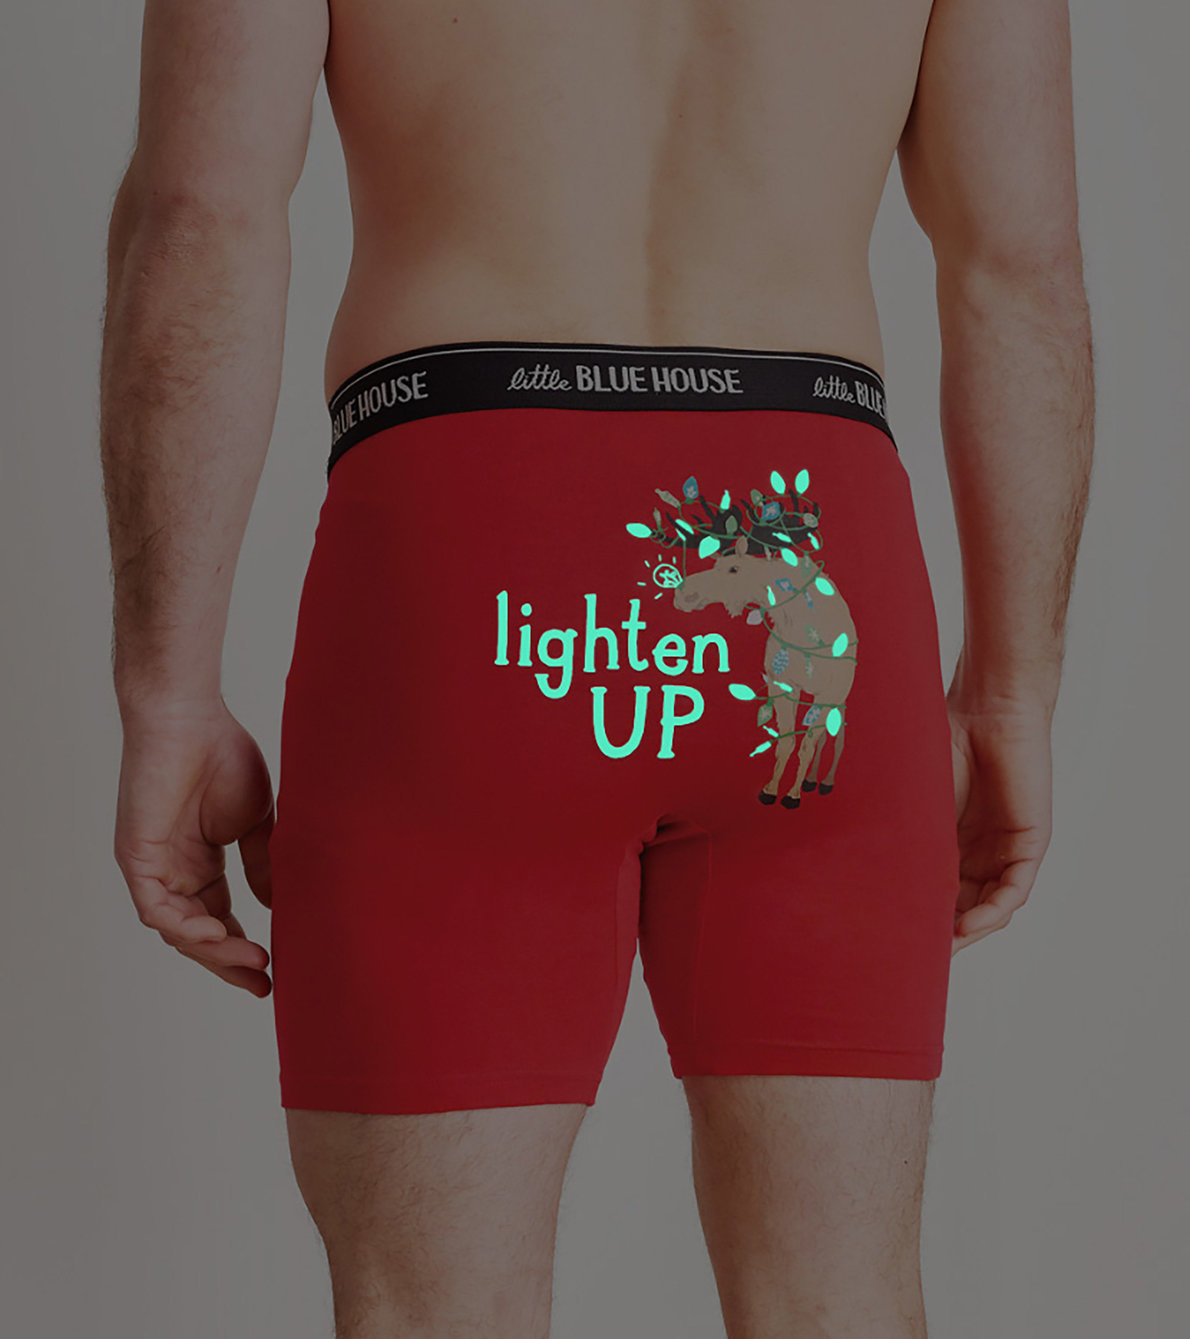 View larger image of Lighten Up Men's Boxer Briefs